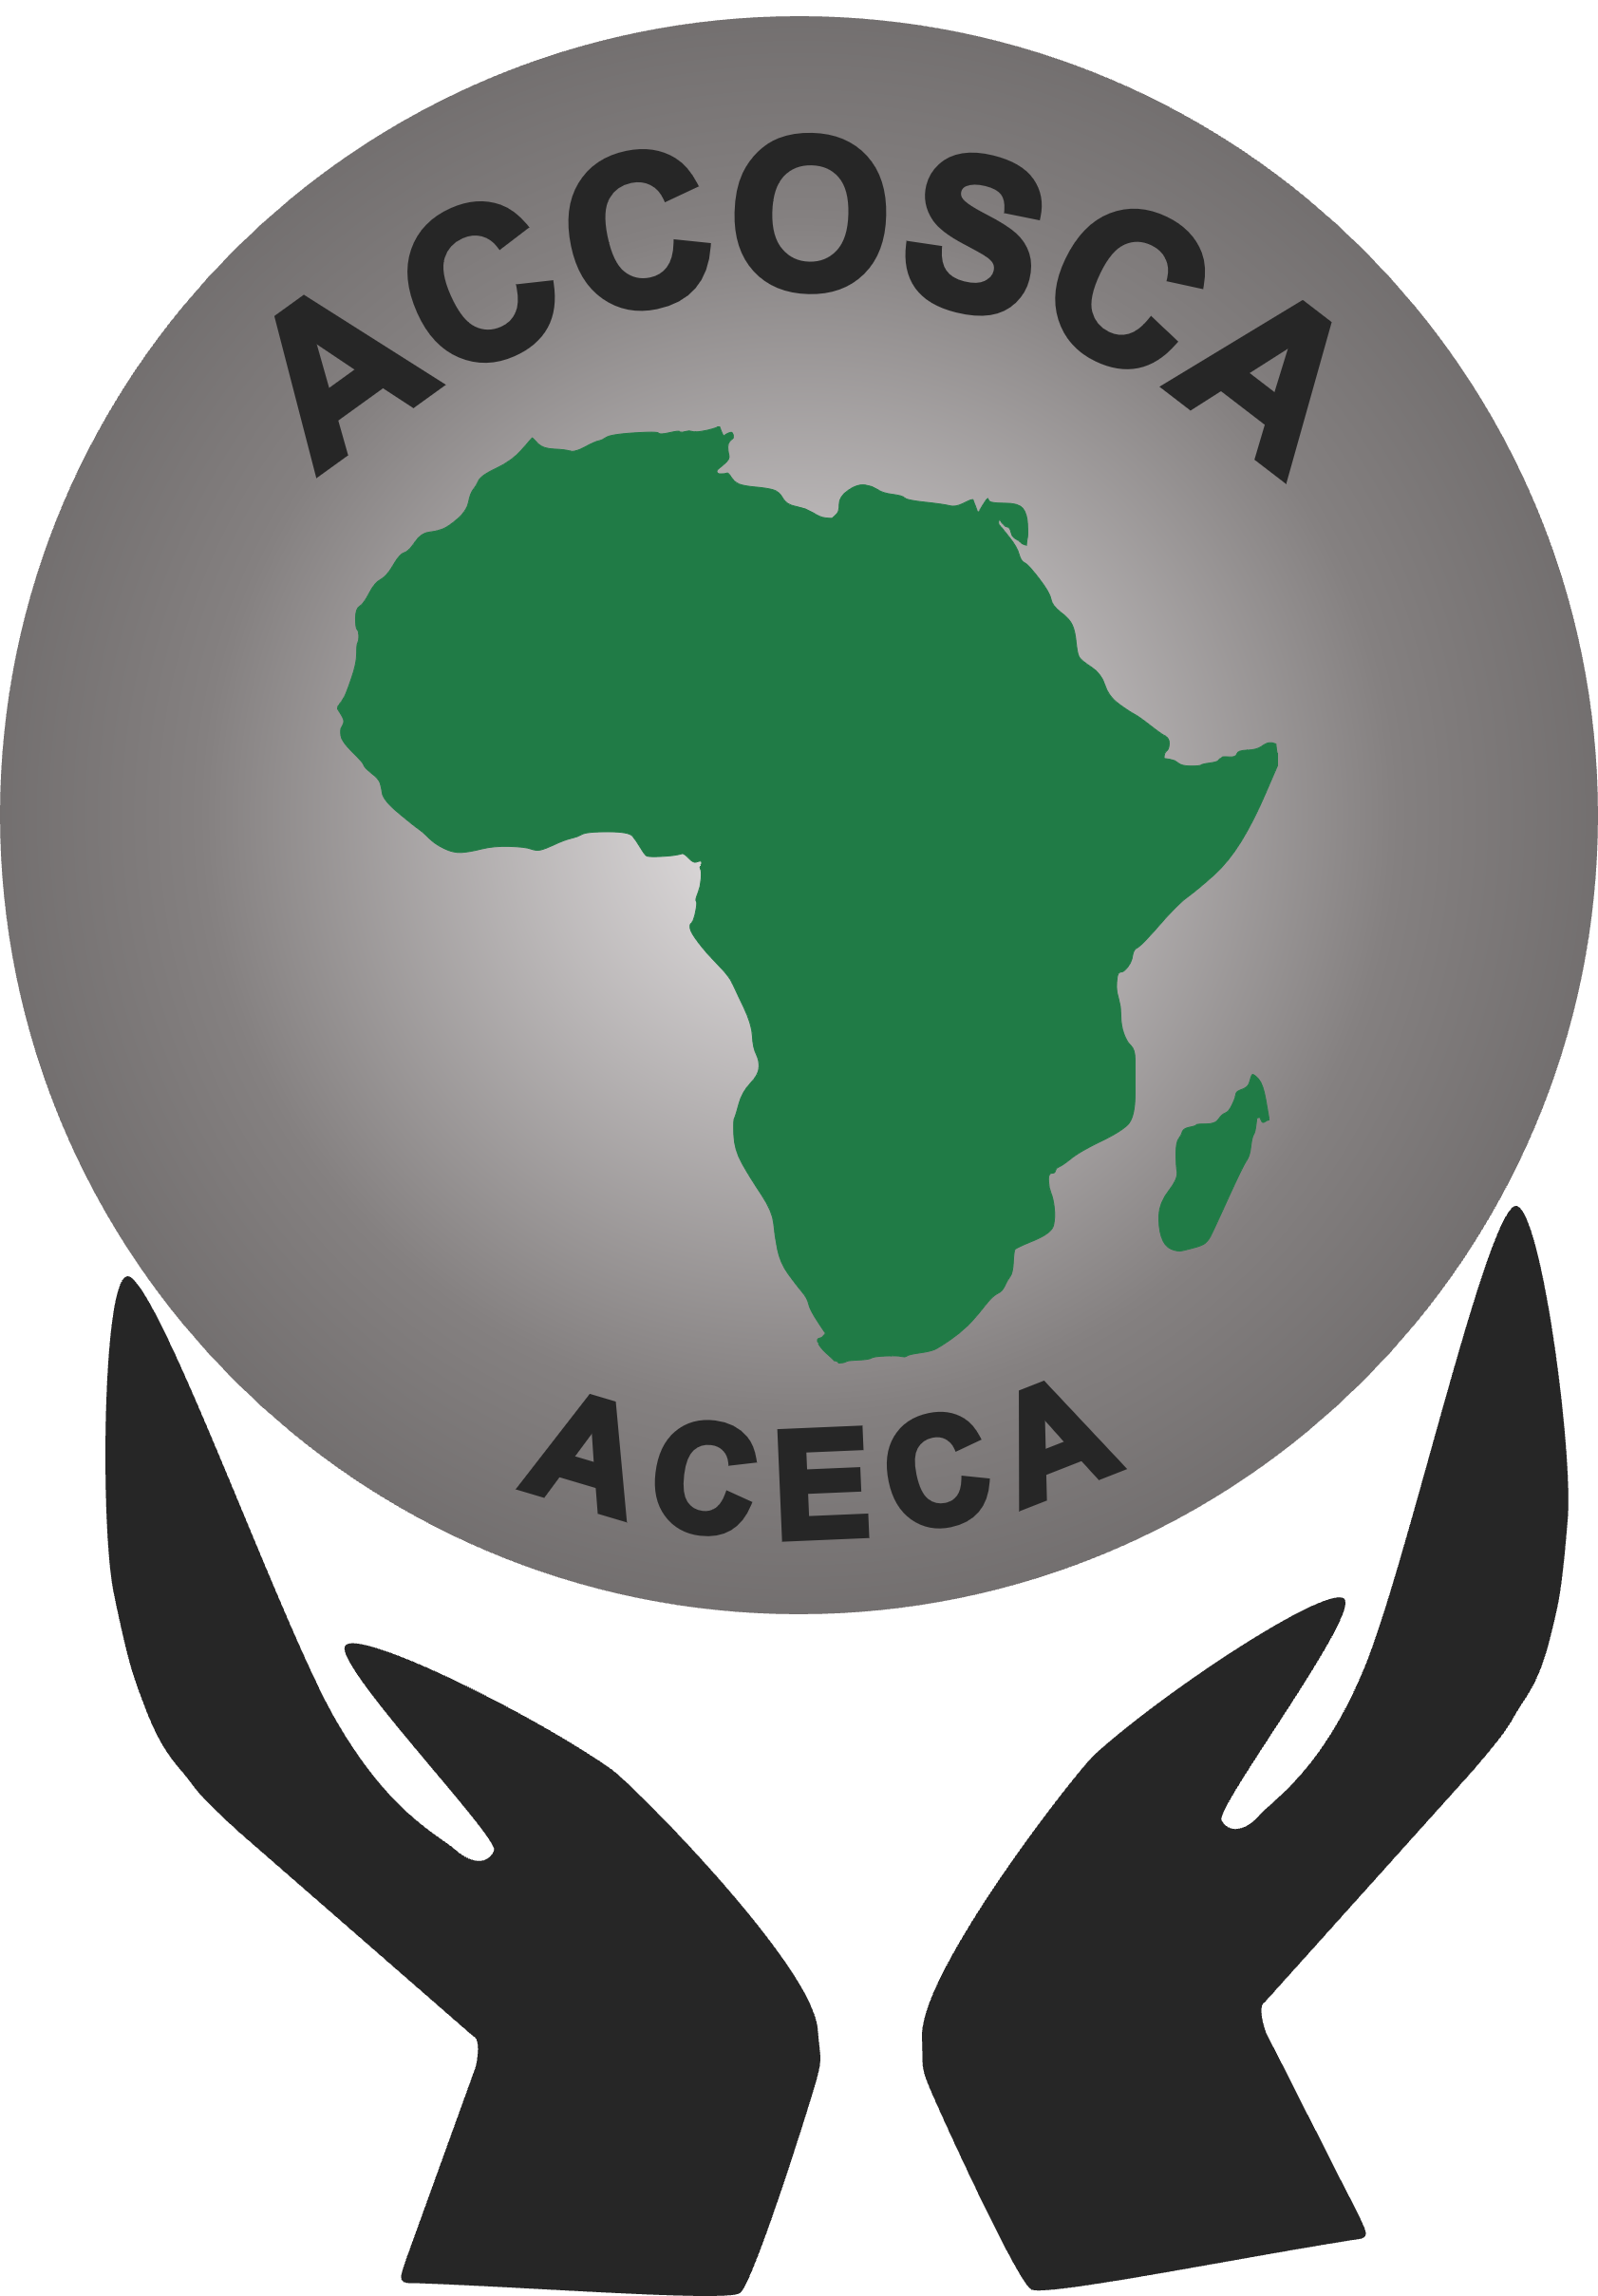 ACCOSCA || African Federation of Cooperative Societies